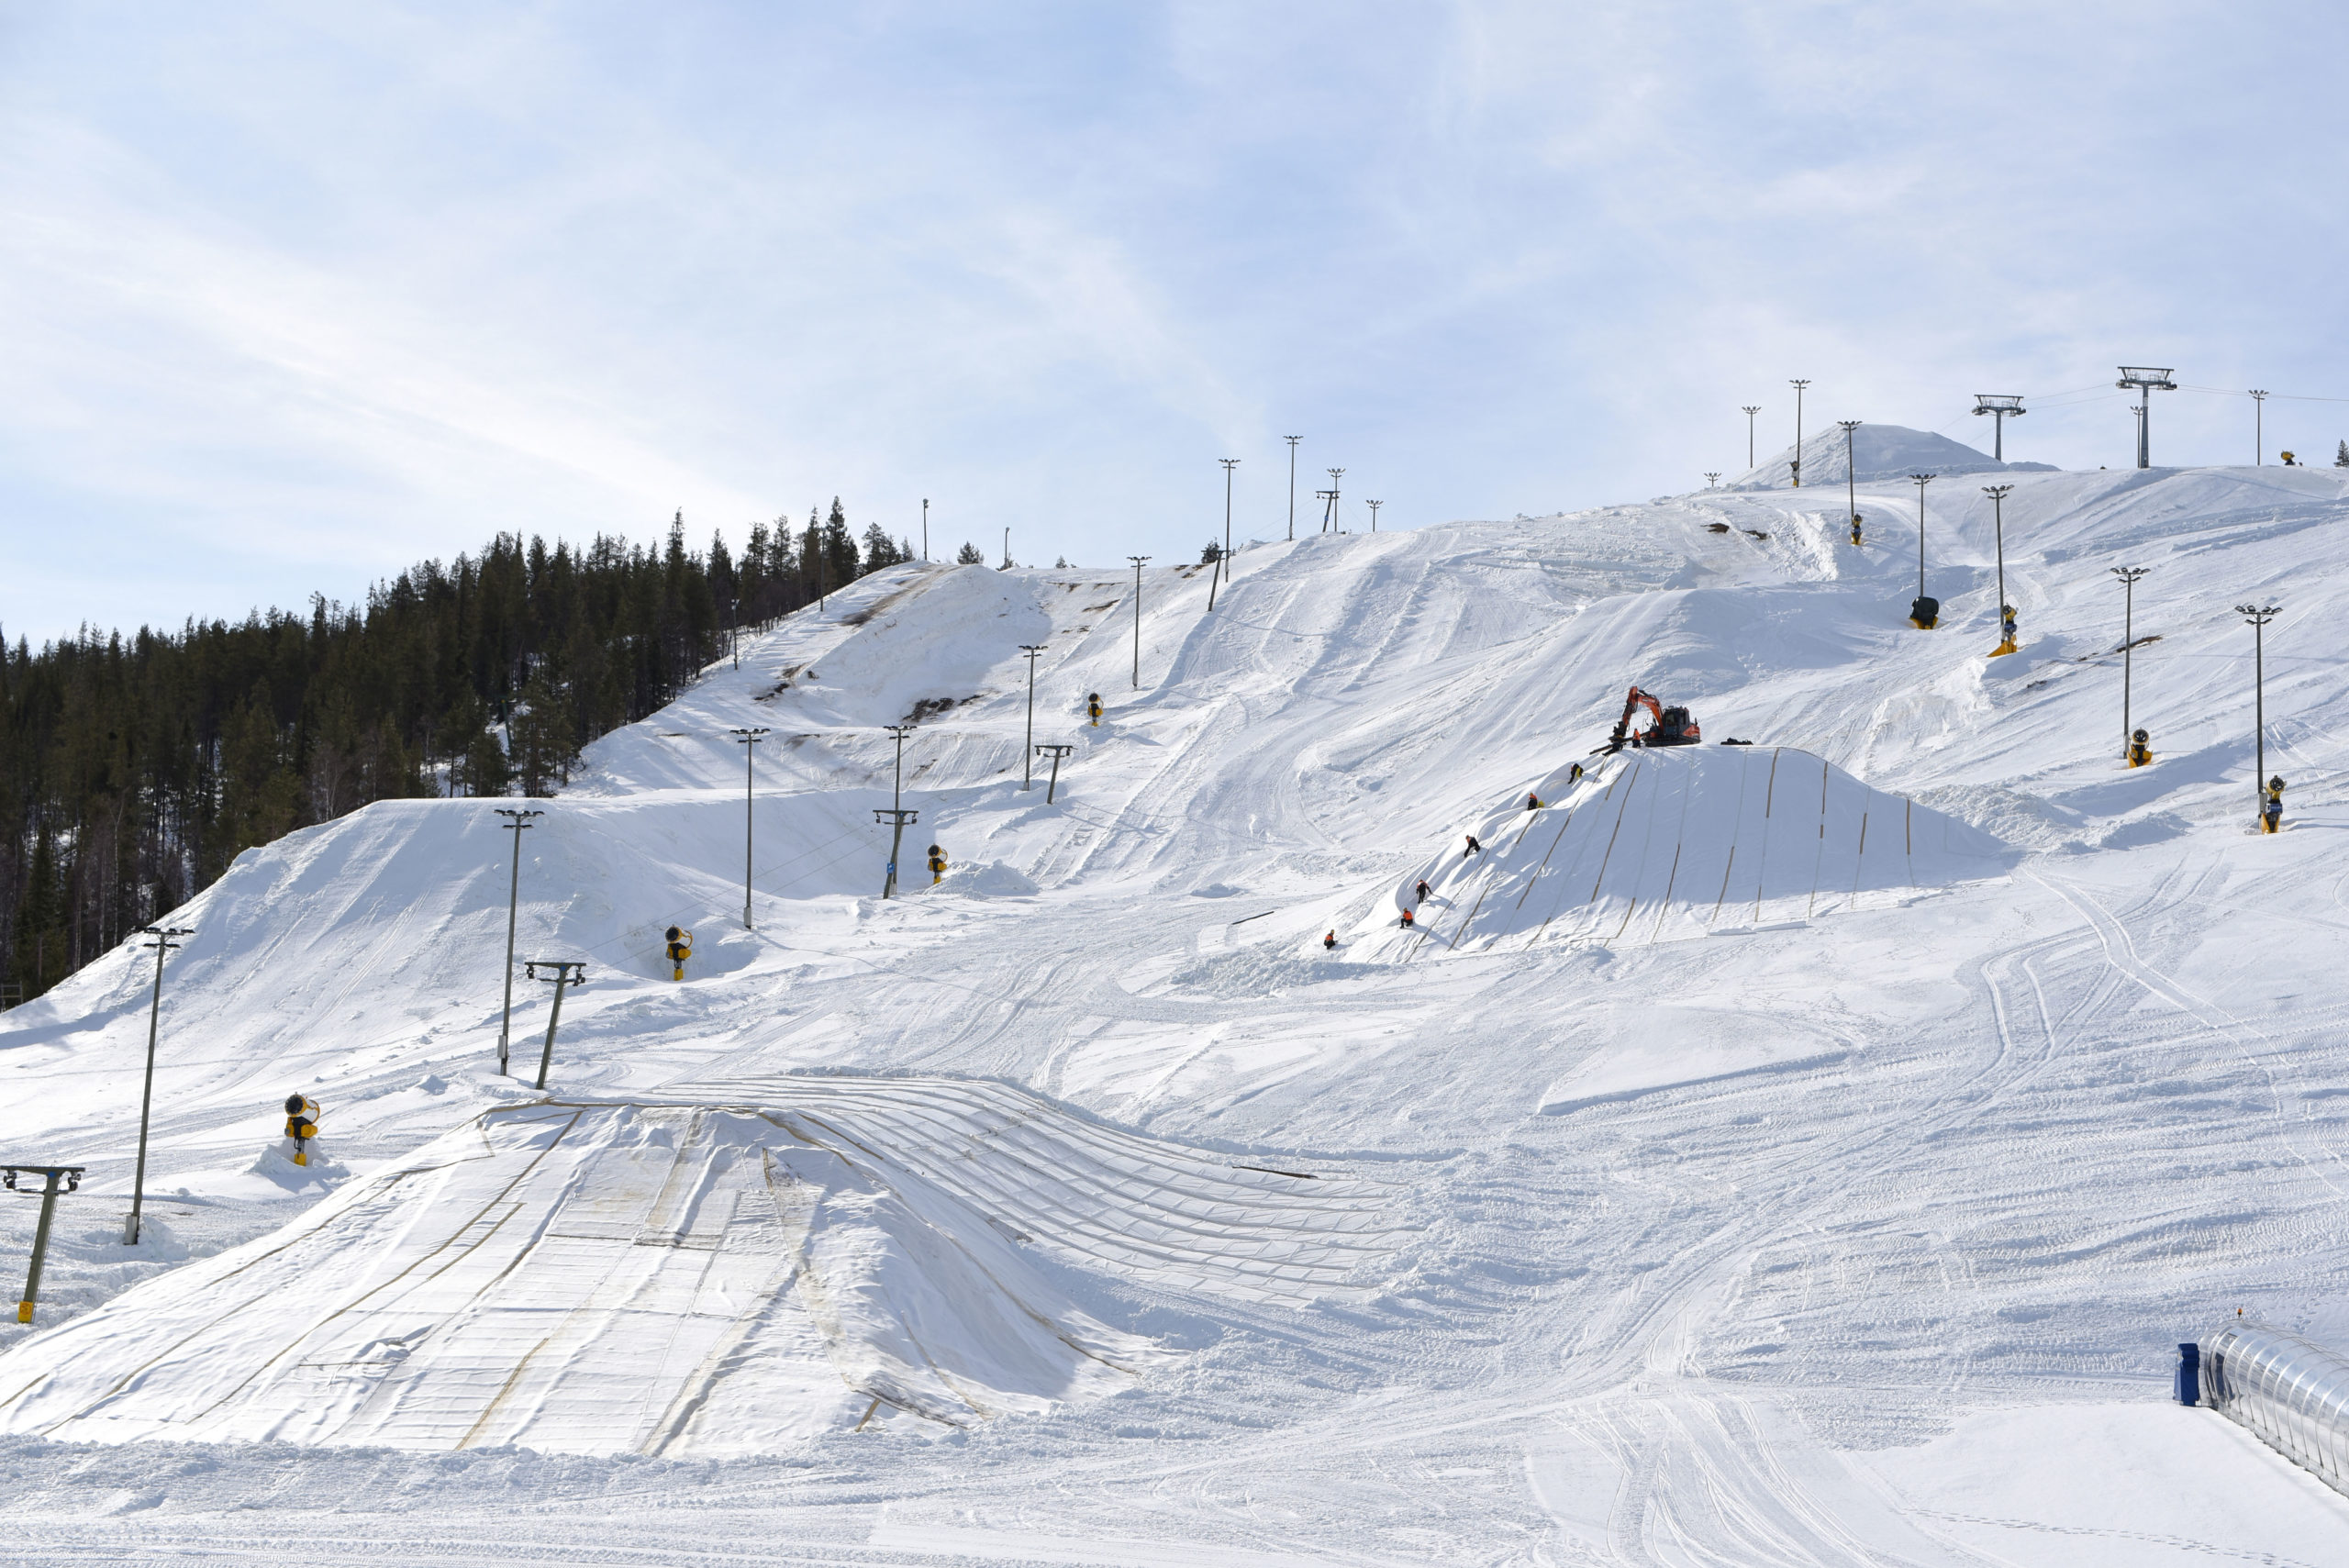 This ski resort Finland is saving snow for next season - FREESKIER